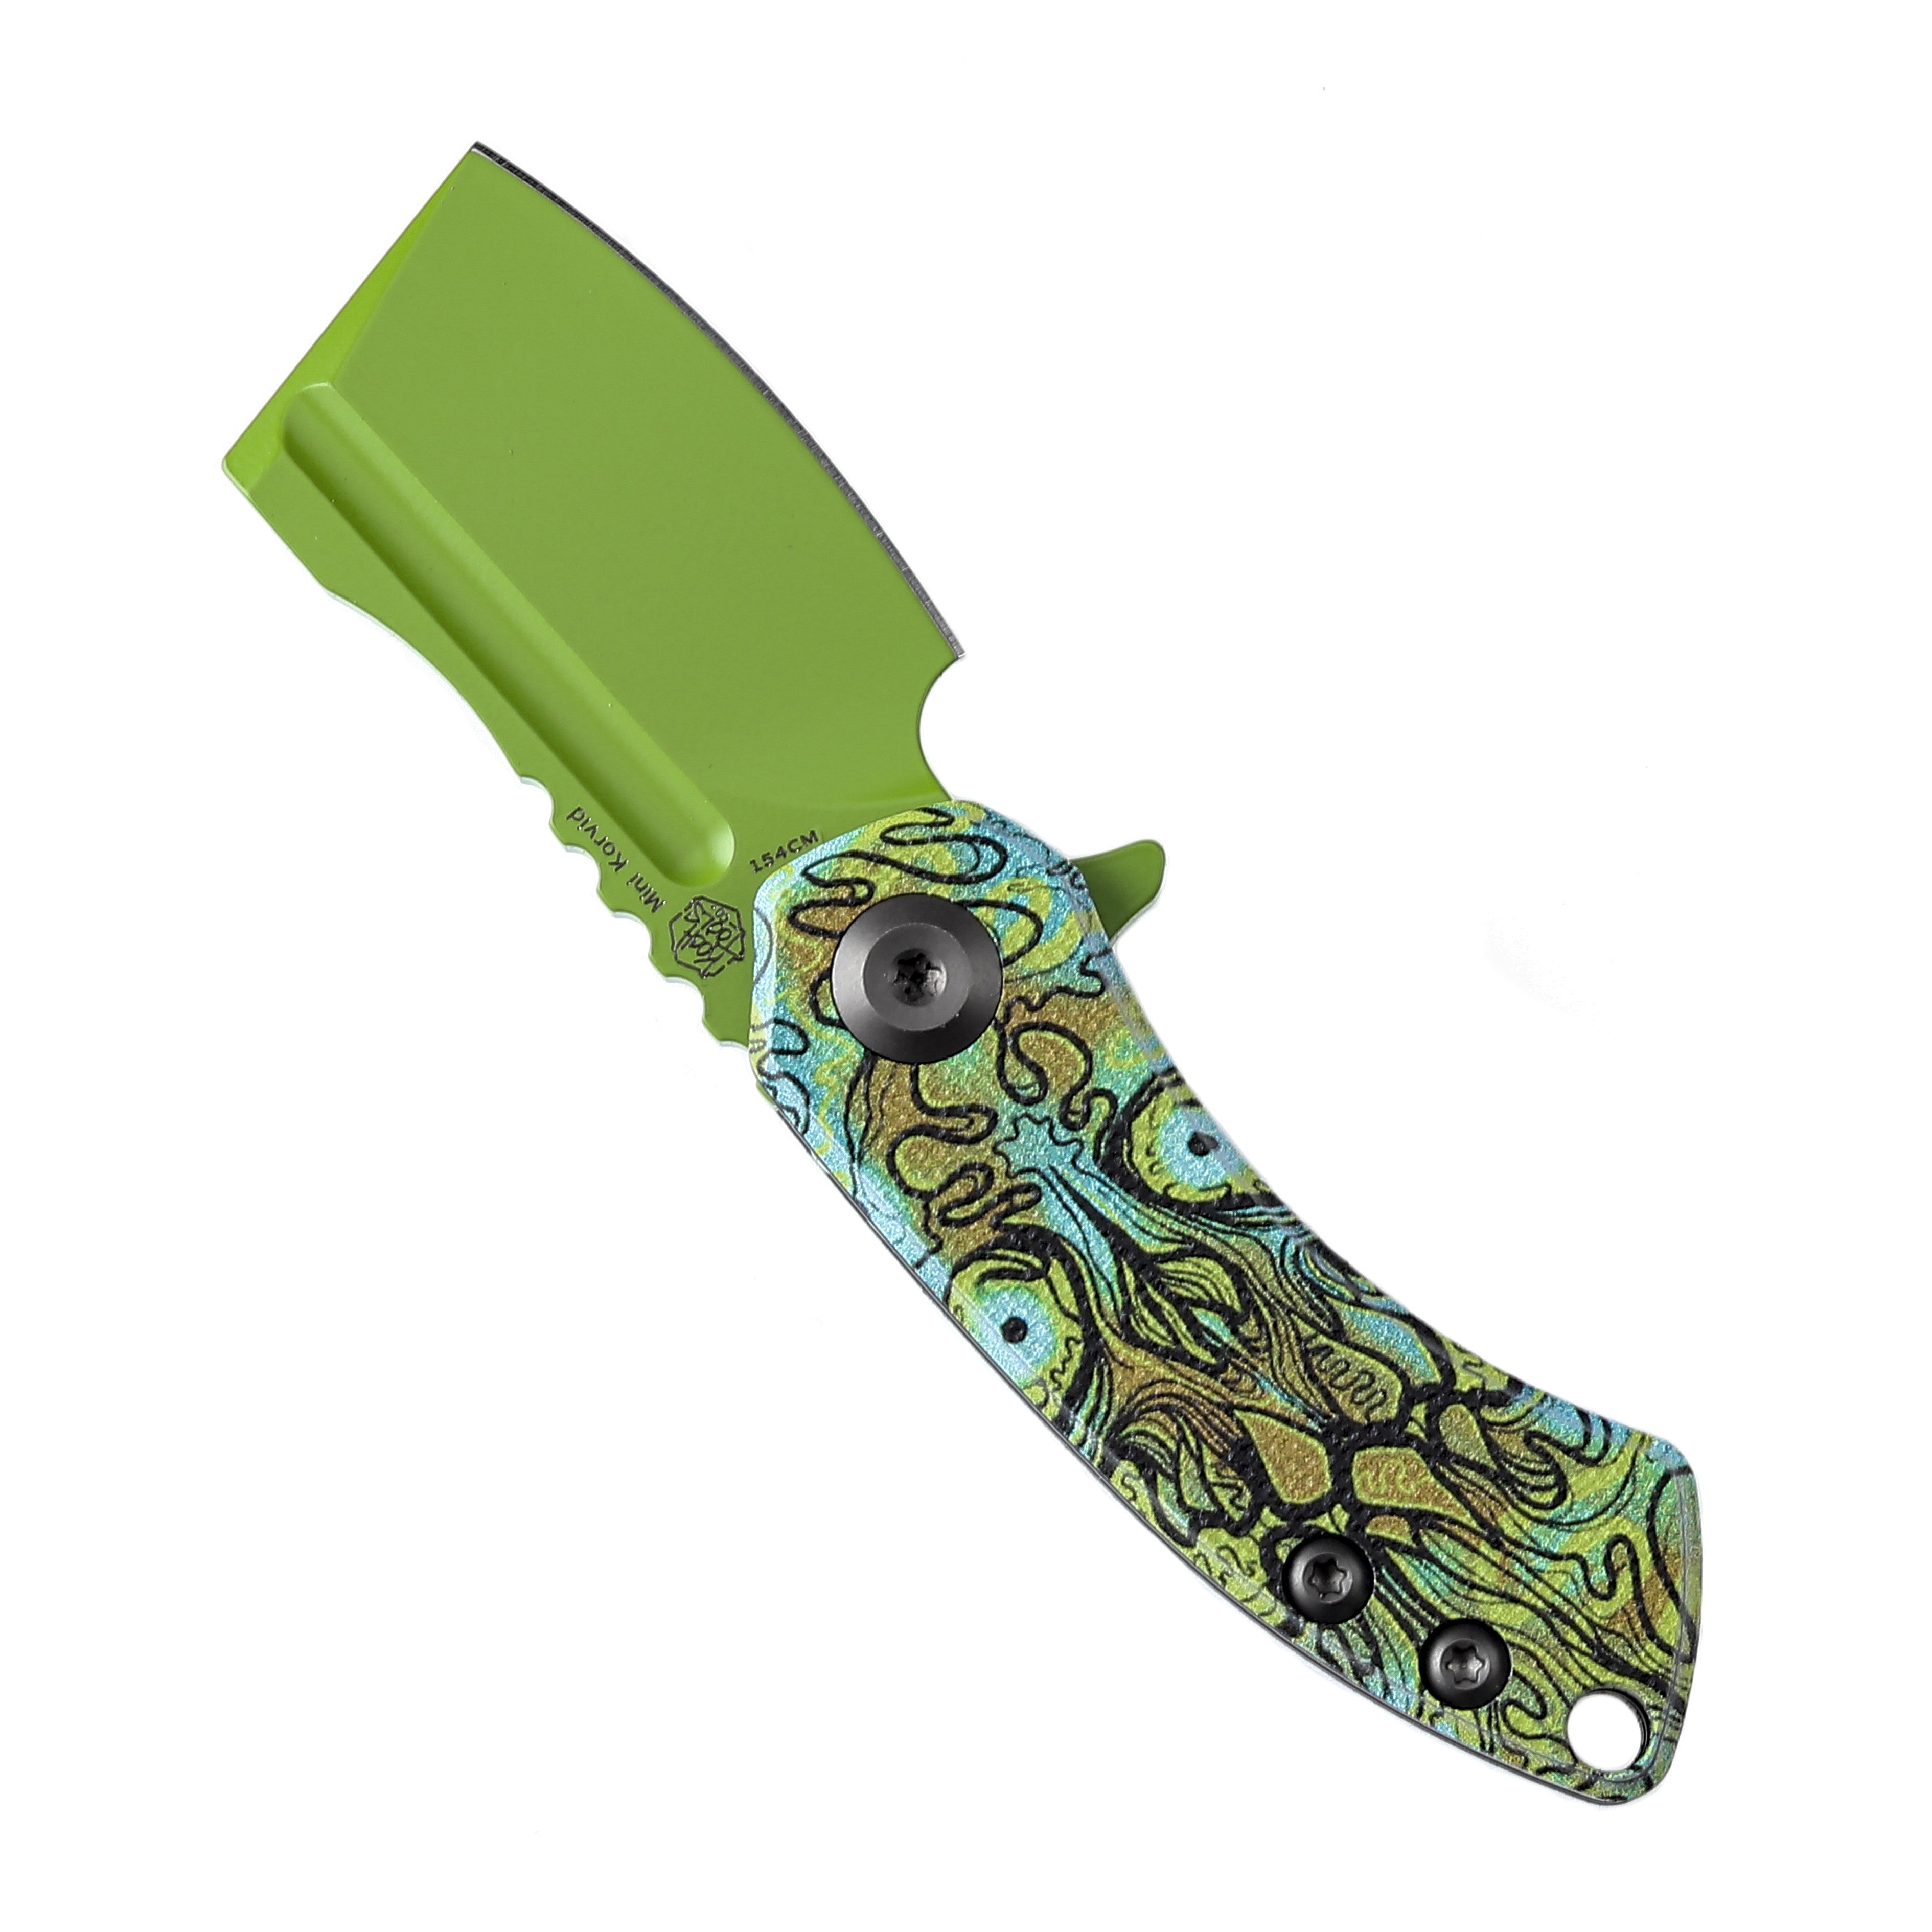 Kansept Knives T3030B2 Mini Korvid Green 154CM Blade Undead Print-Green G10 Handle Liner Lock Edc Knives